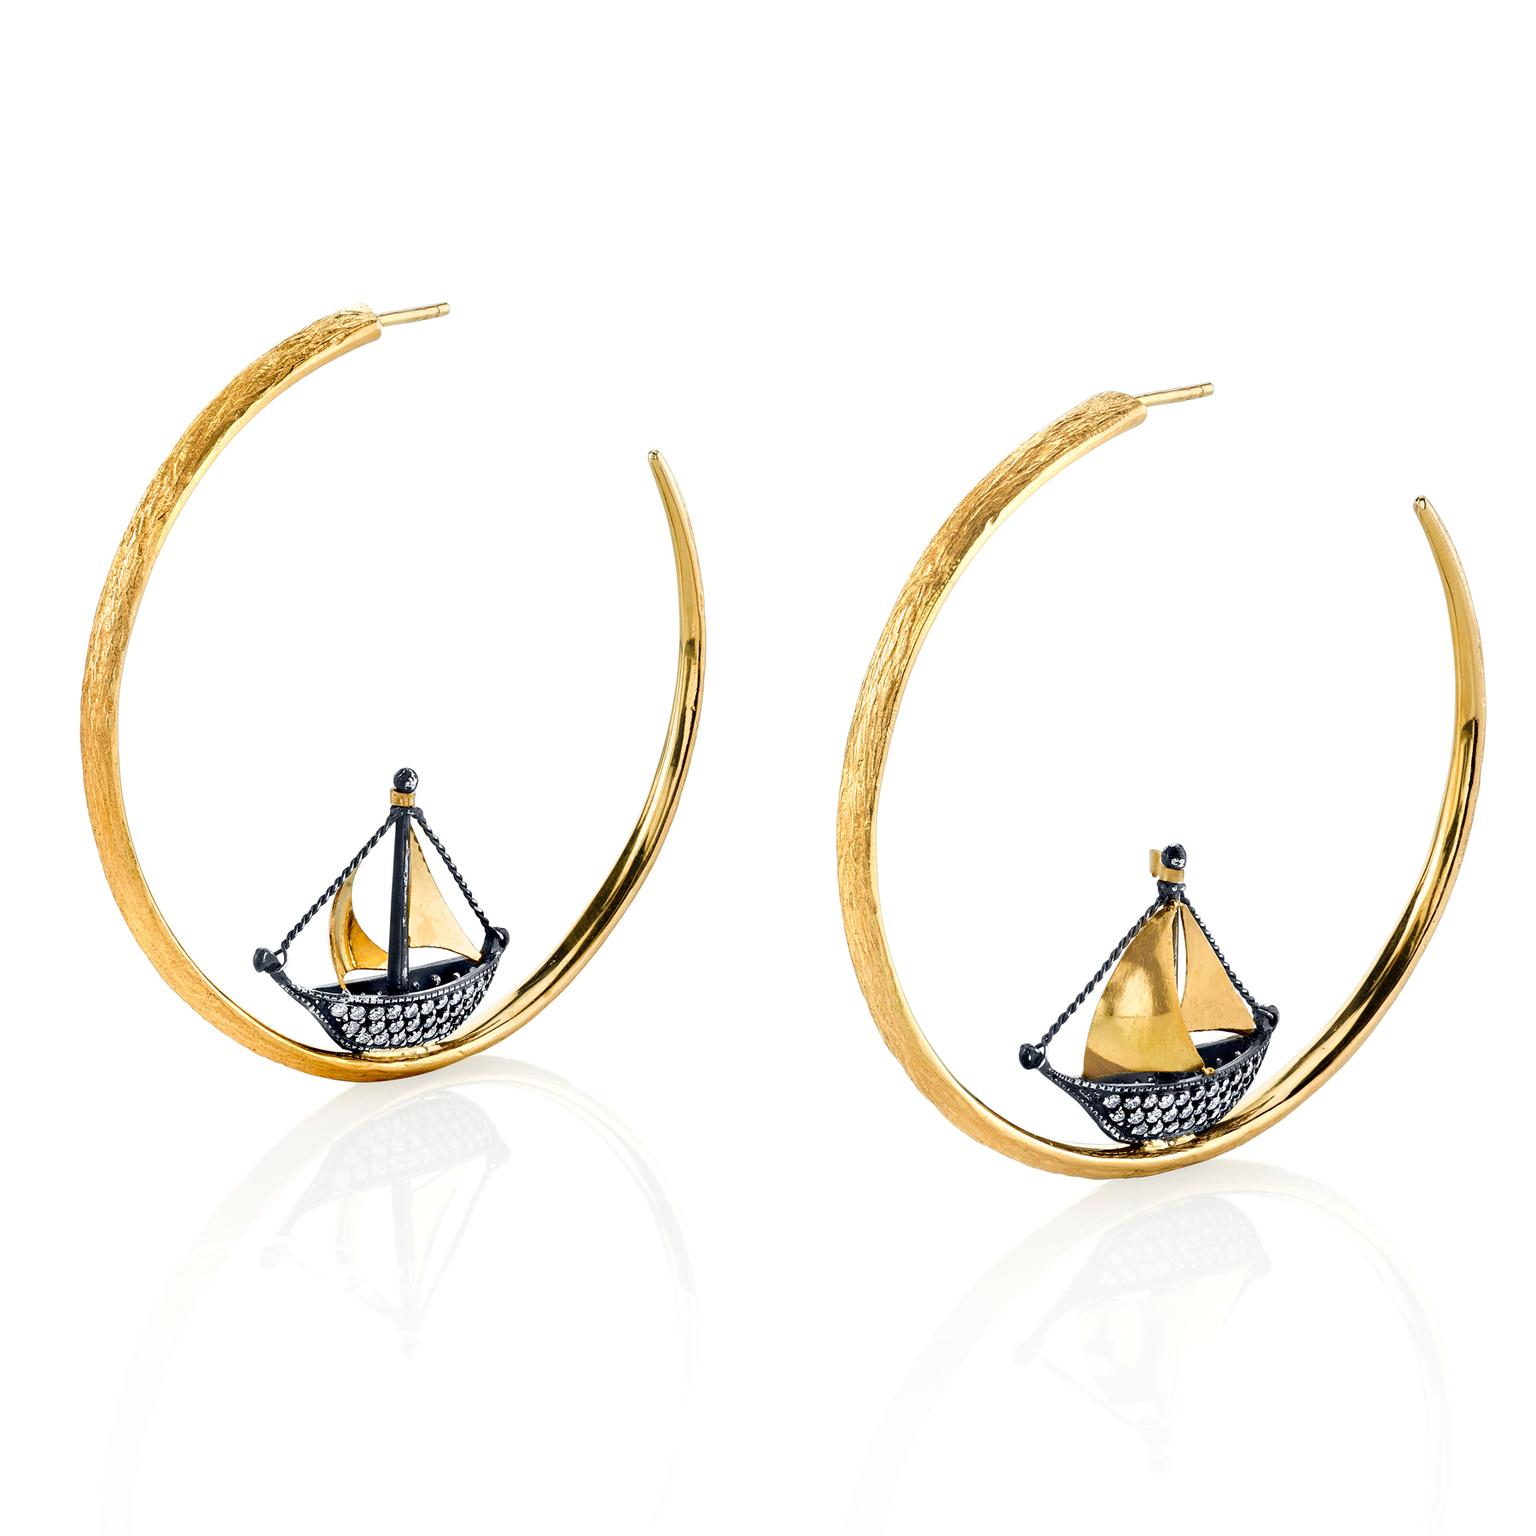 Arman Sarkisyan Sail boat hoop earrings